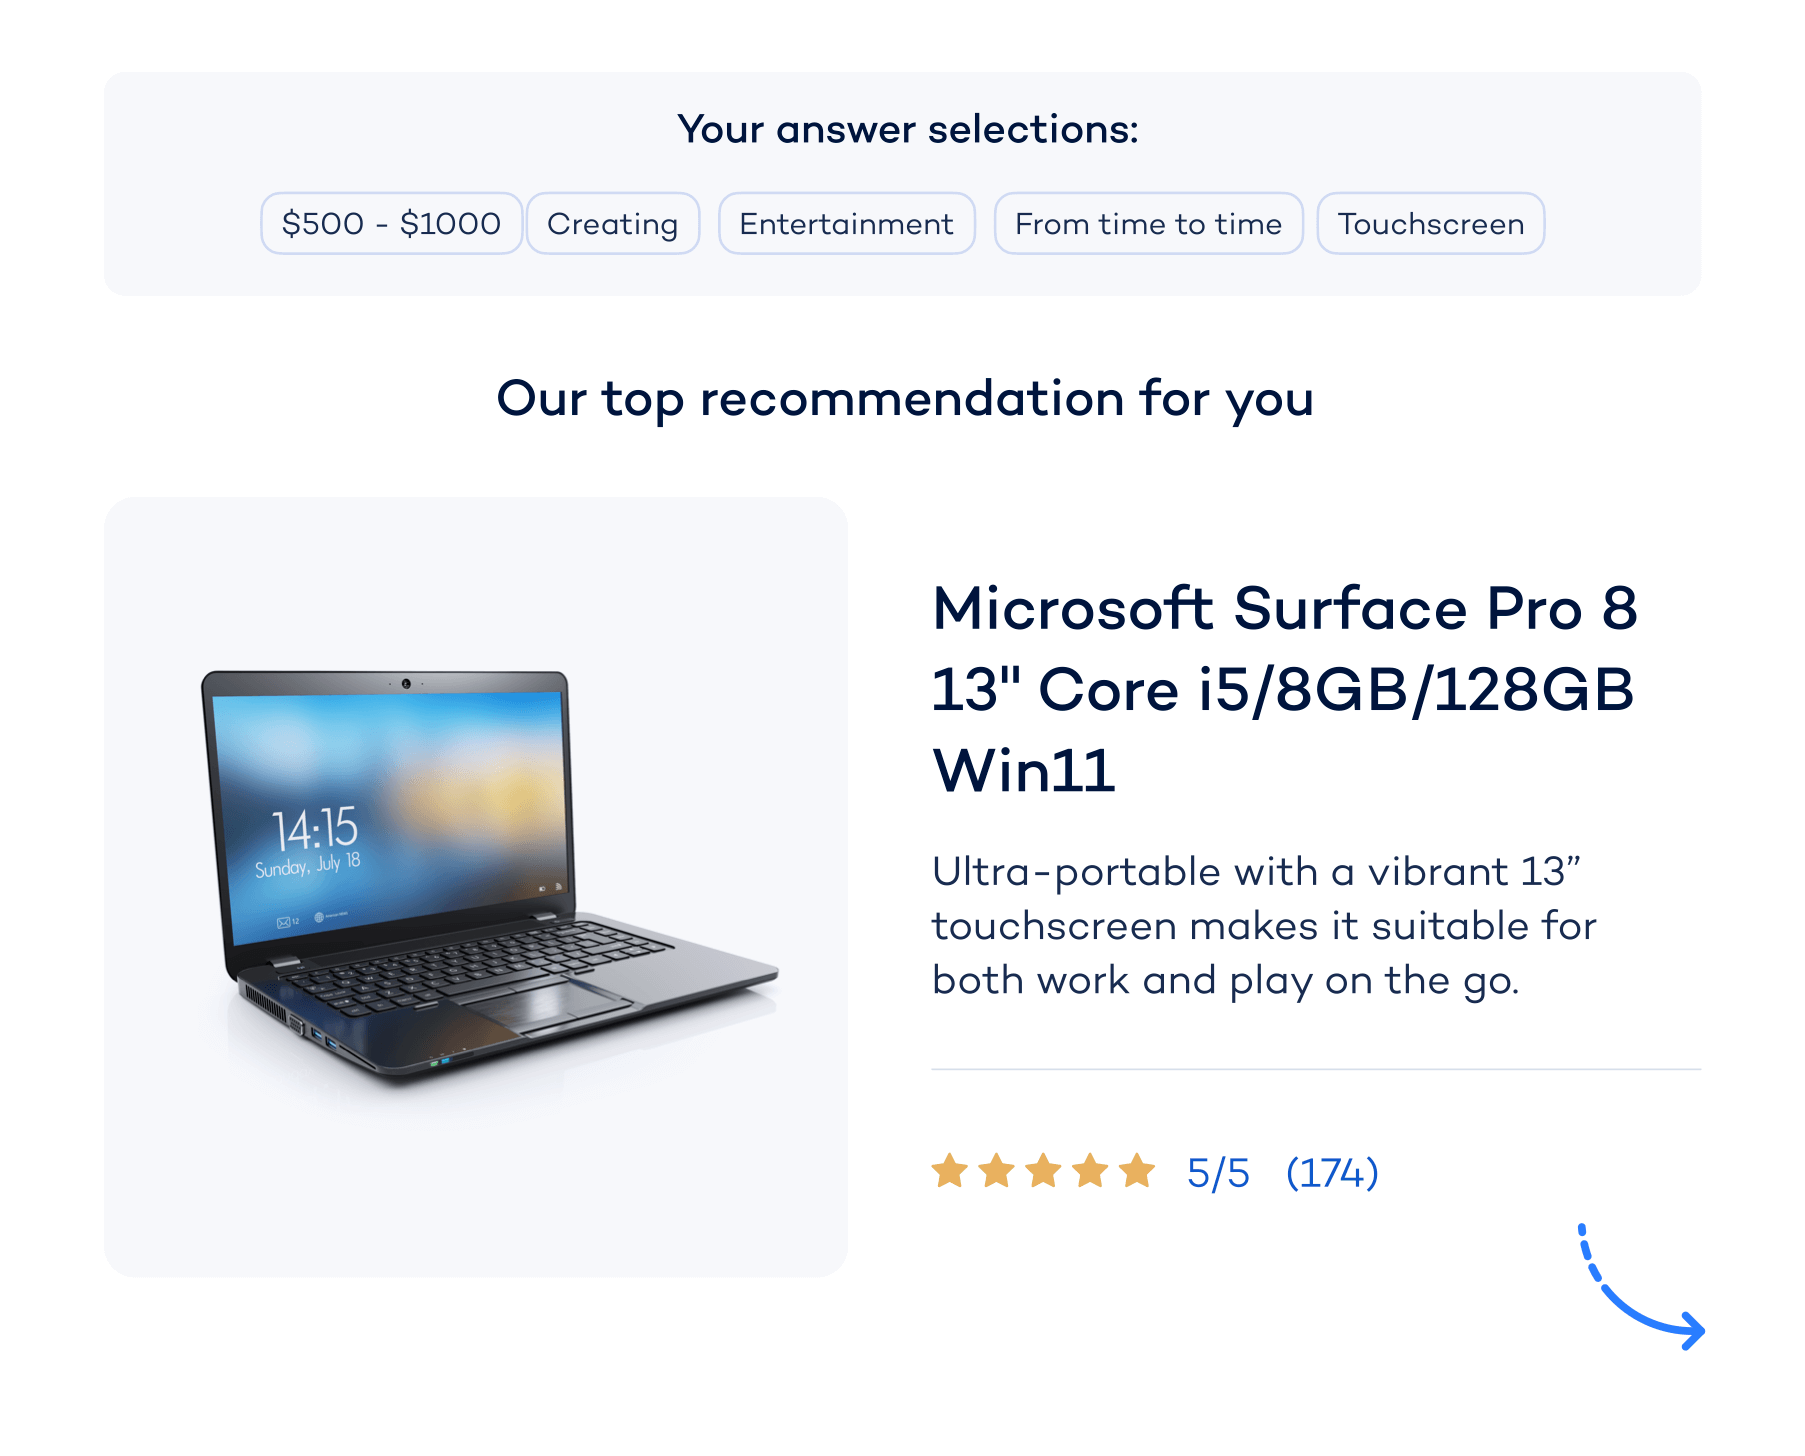 Microsoft Surface Pro 8 13 Core recommendation screen